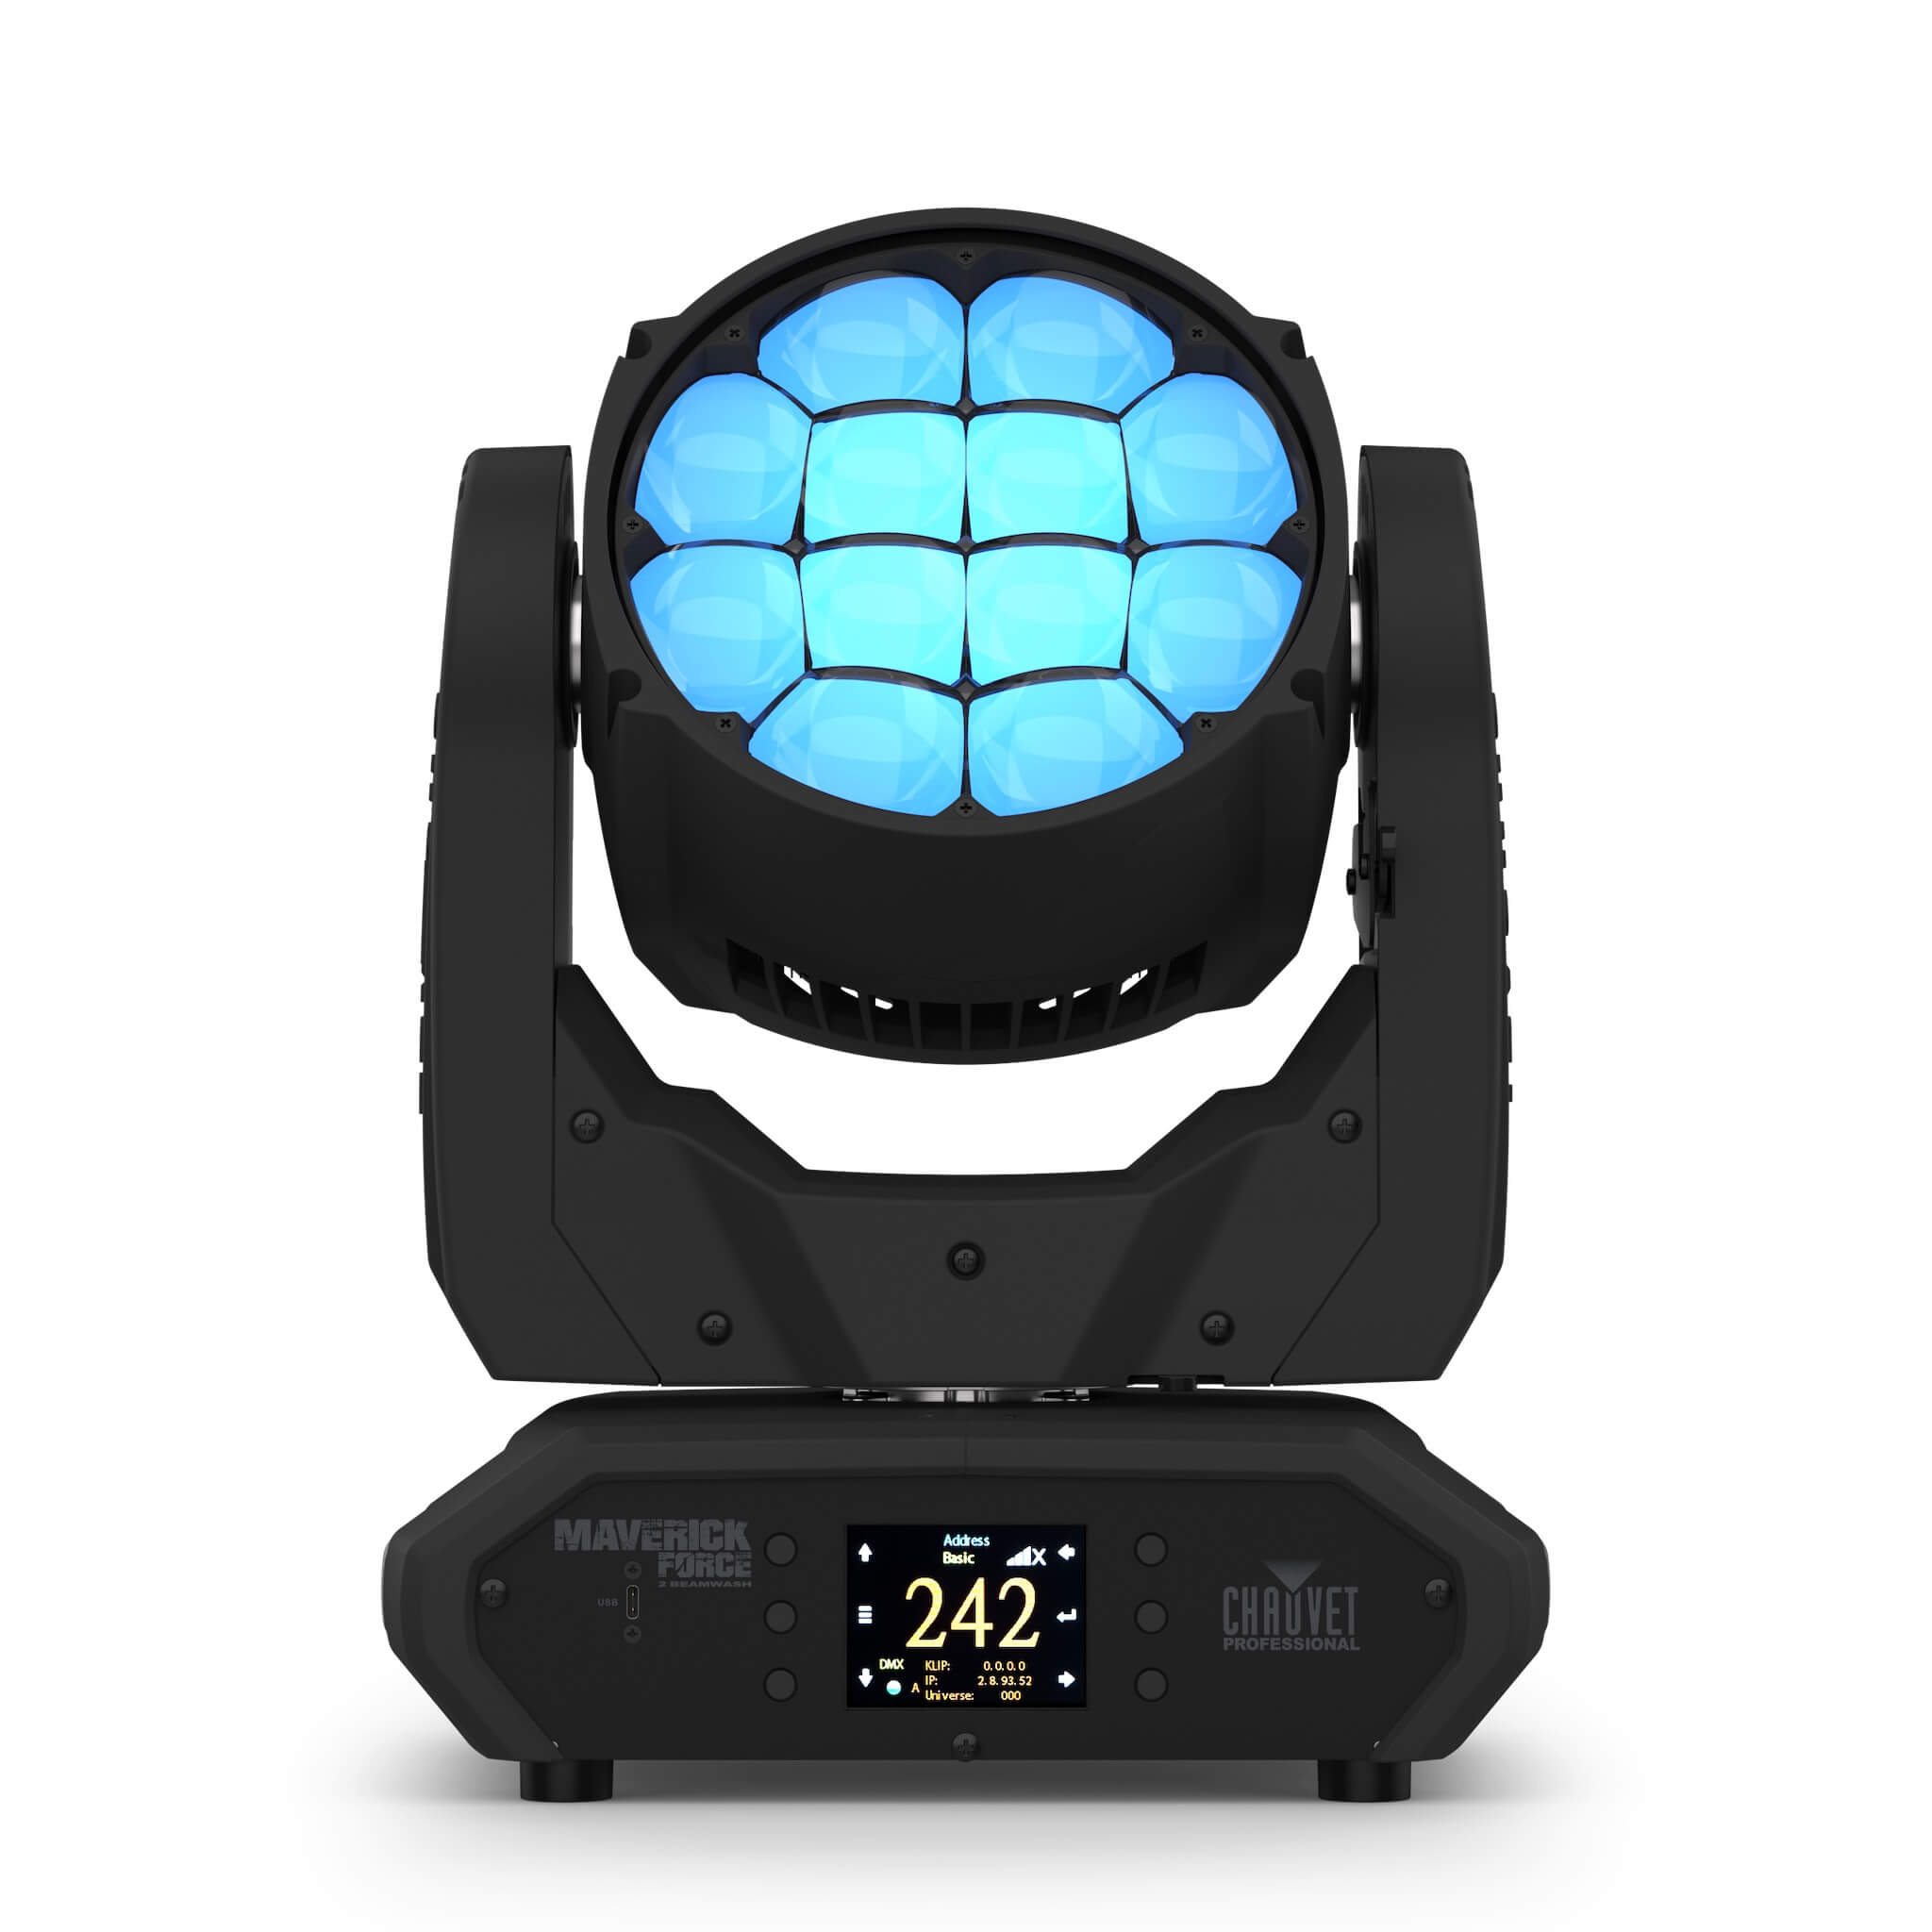 Chauvet Professional Maverick Force 2 BeamWash - LED Moving Head Light, front